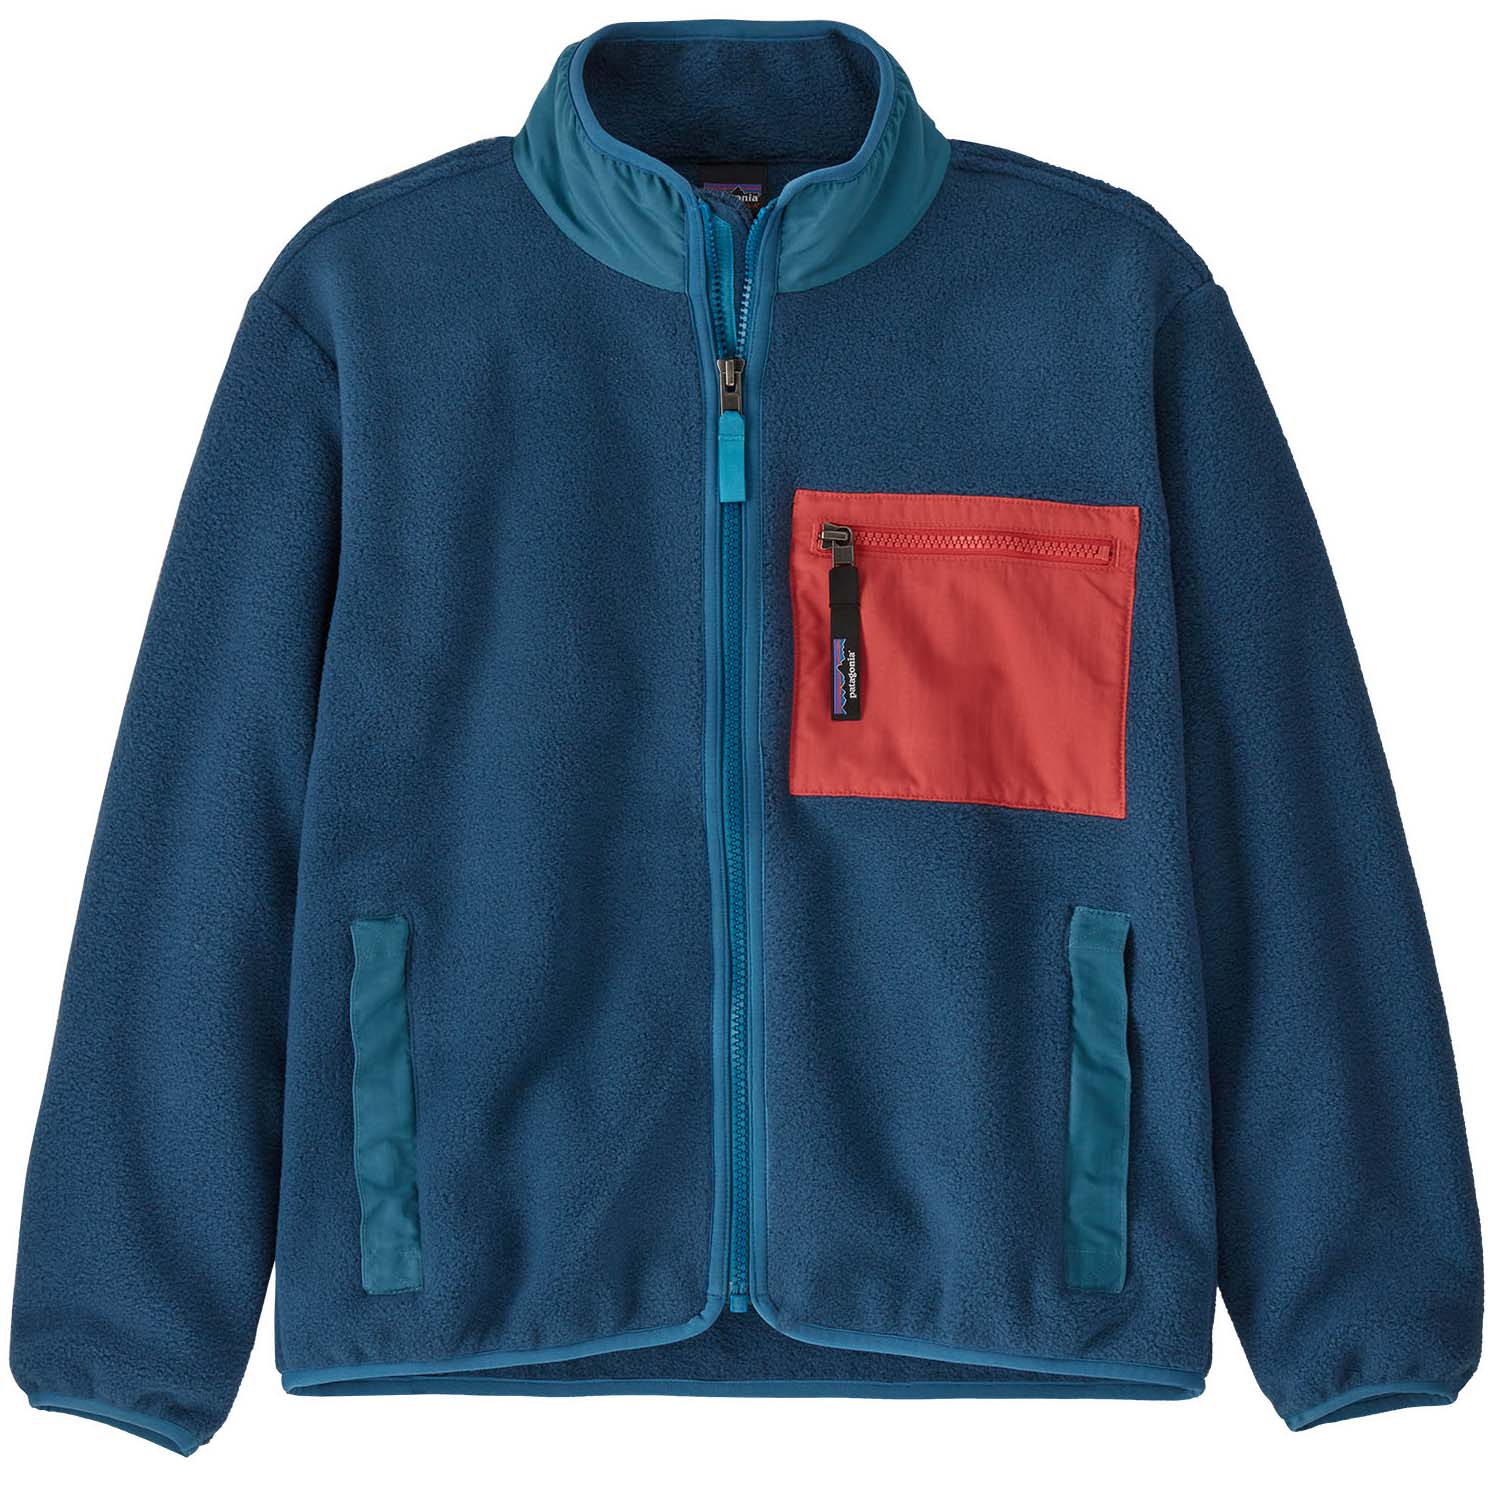 Patagonia Synch Jacket Kids' Full Zip Fleece